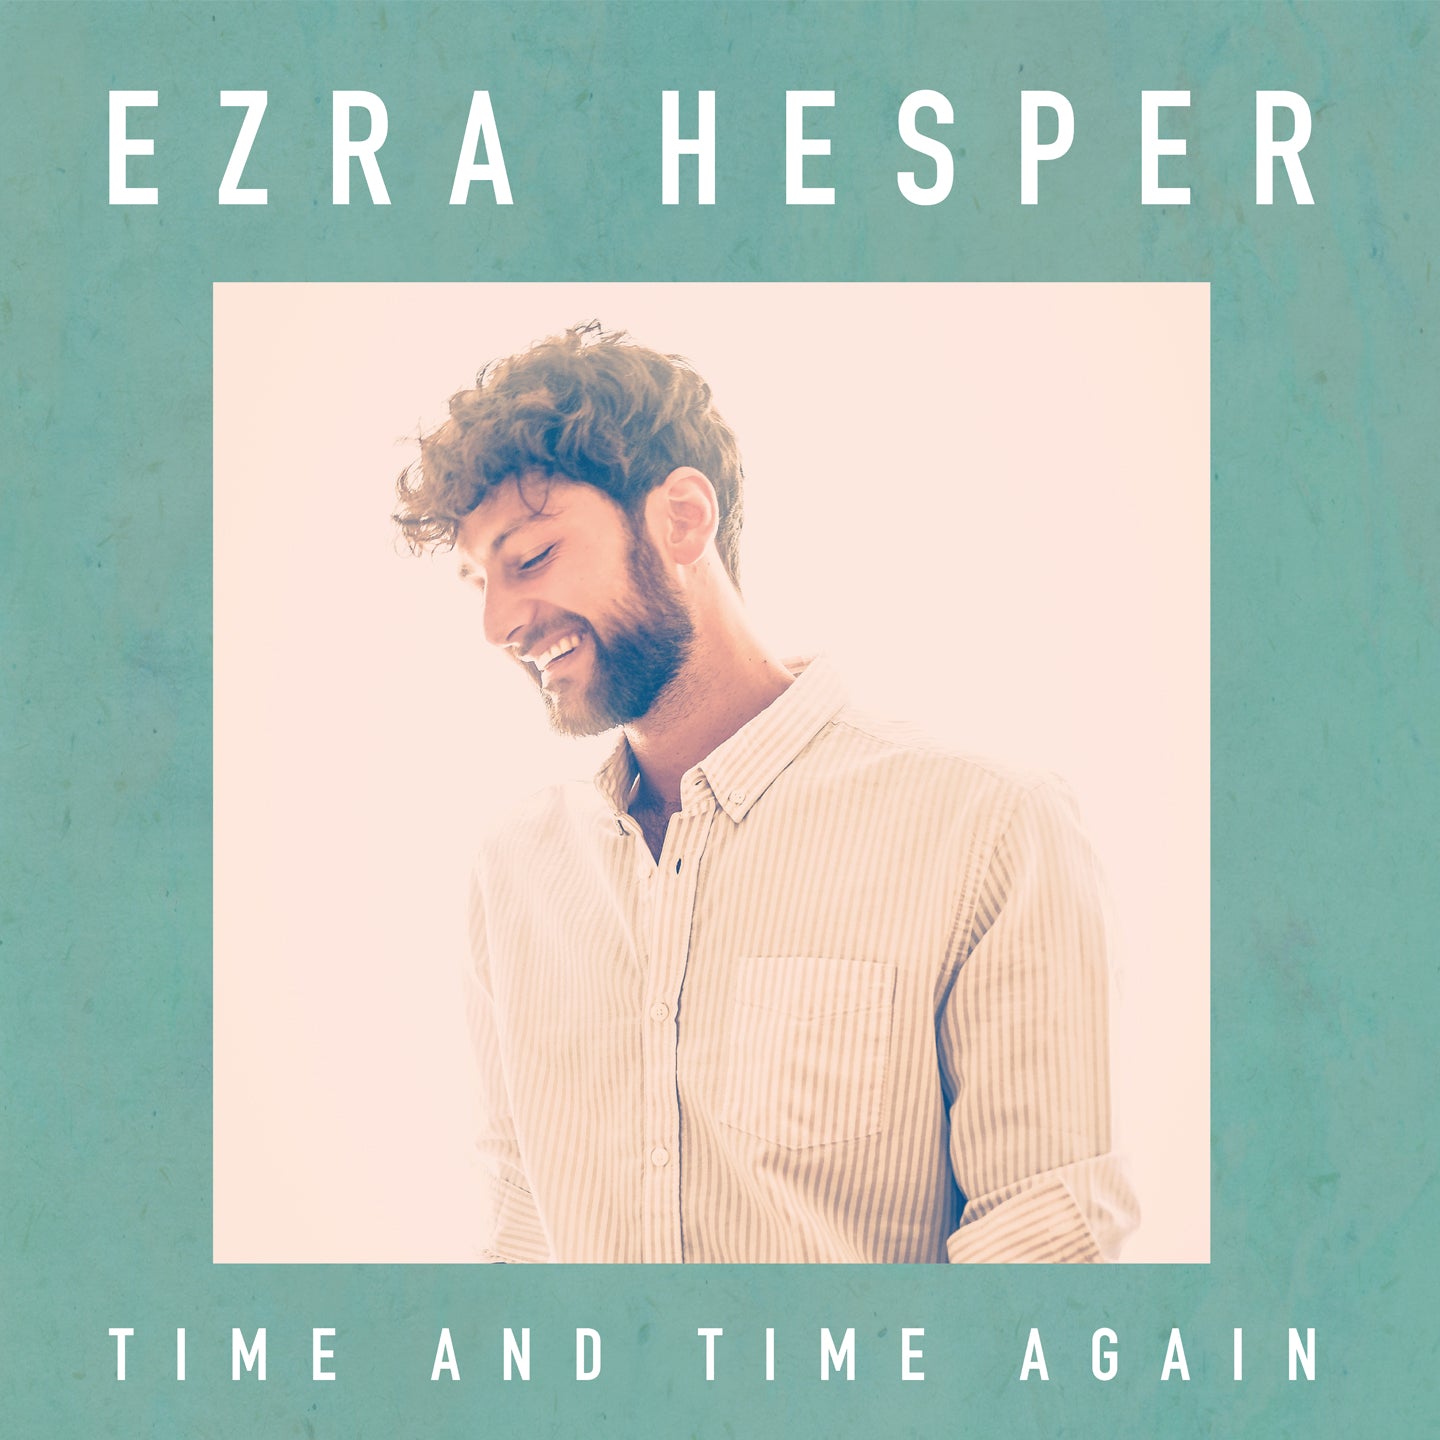 Pochette de : TIME AND TIME AGAIN - EZRA HESPER (33T)